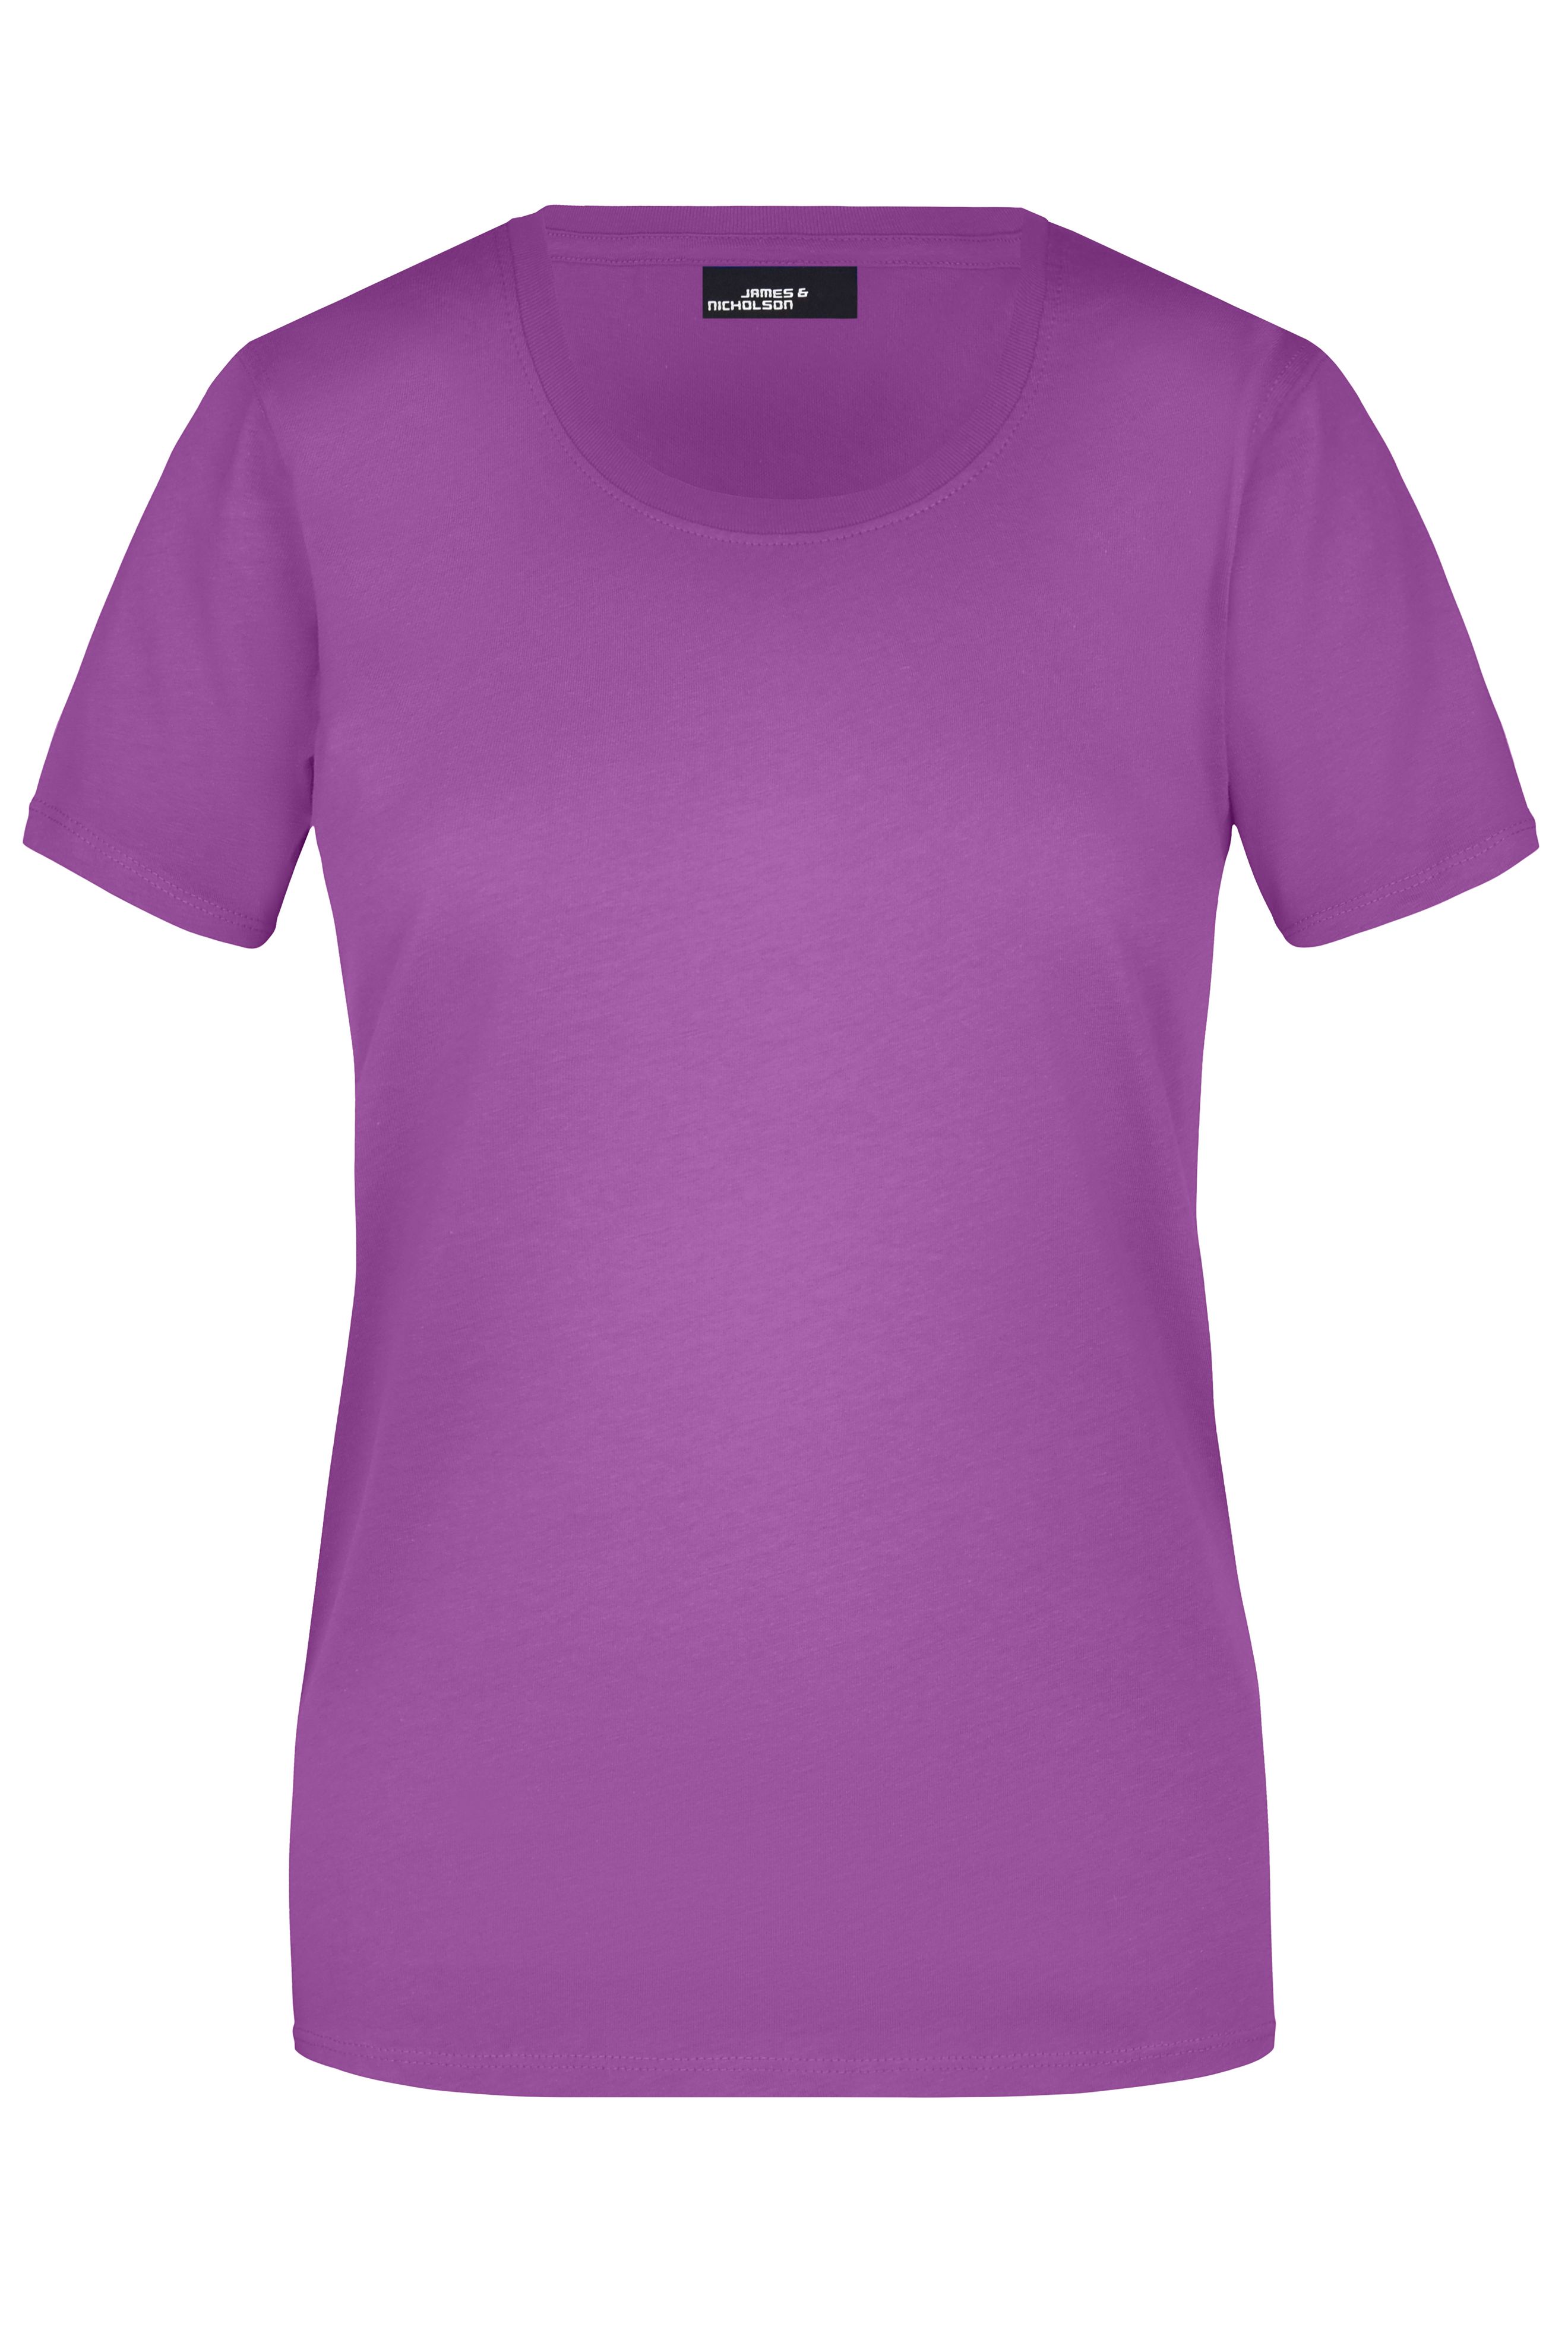 Ladies' Basic-T JN901 Leicht tailliertes T-Shirt aus Single-Jersey